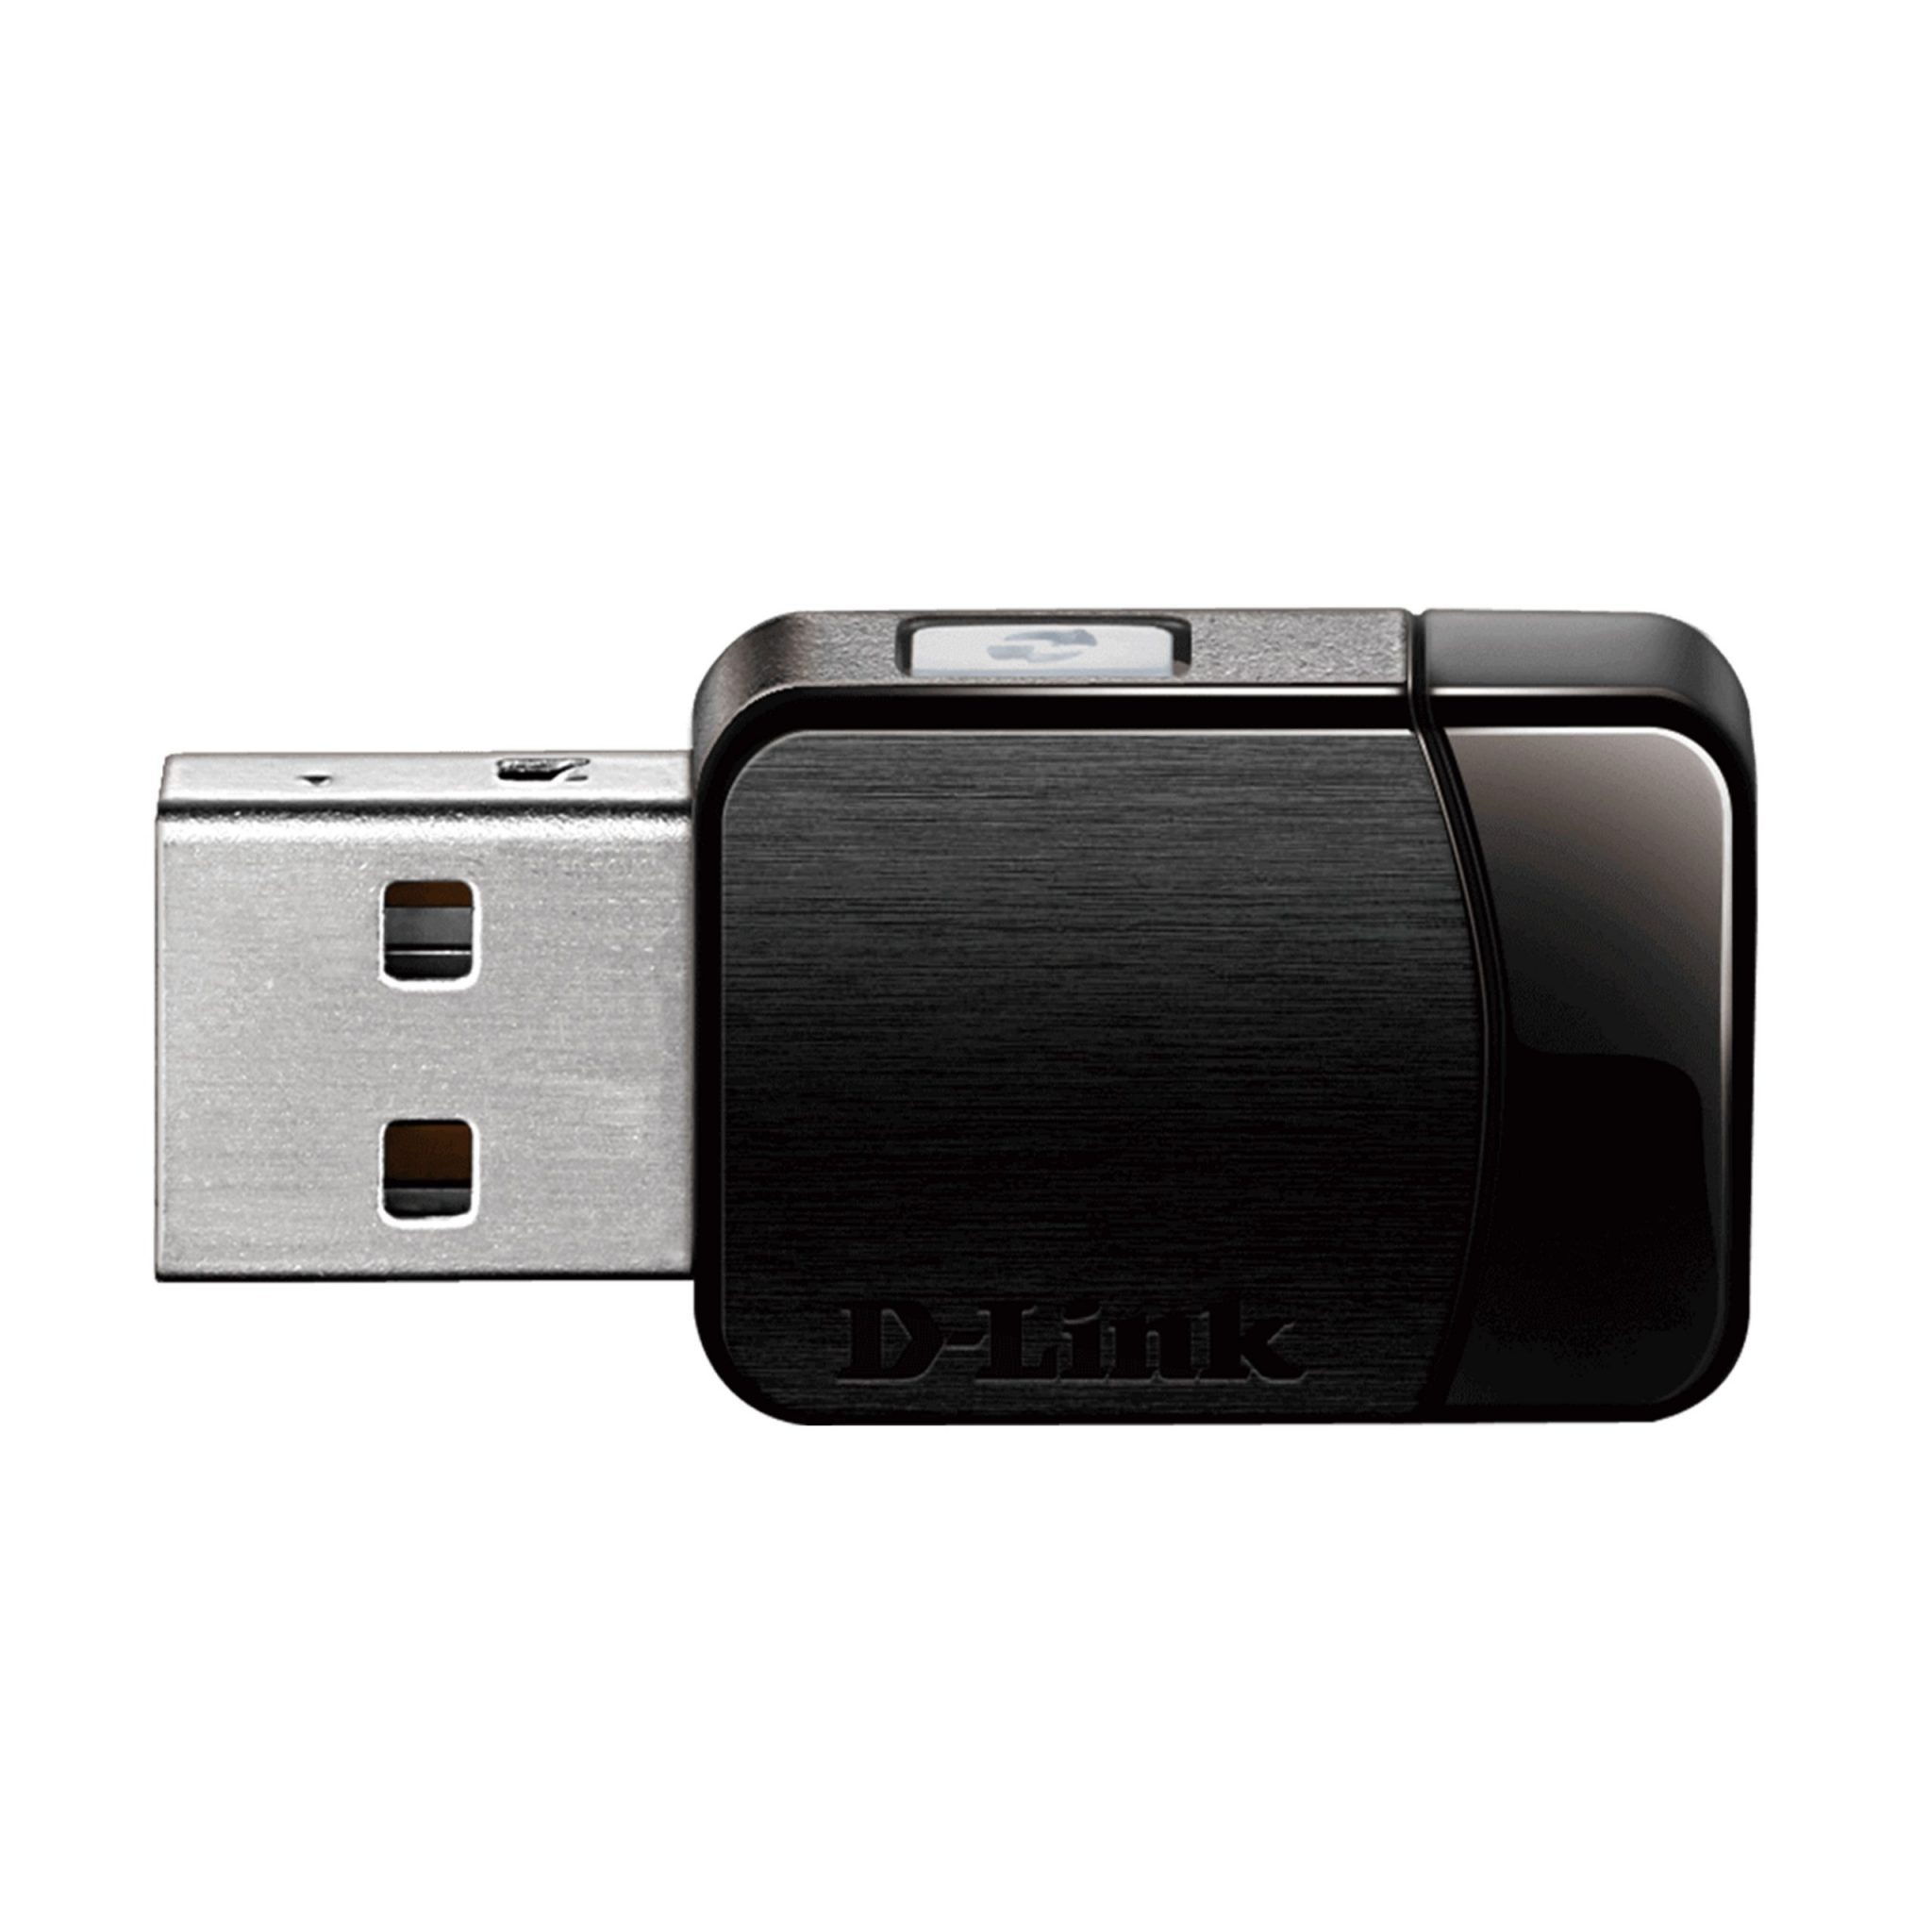 D-LINK AC600 MU-MIMO WI-FI USB ADAPTER